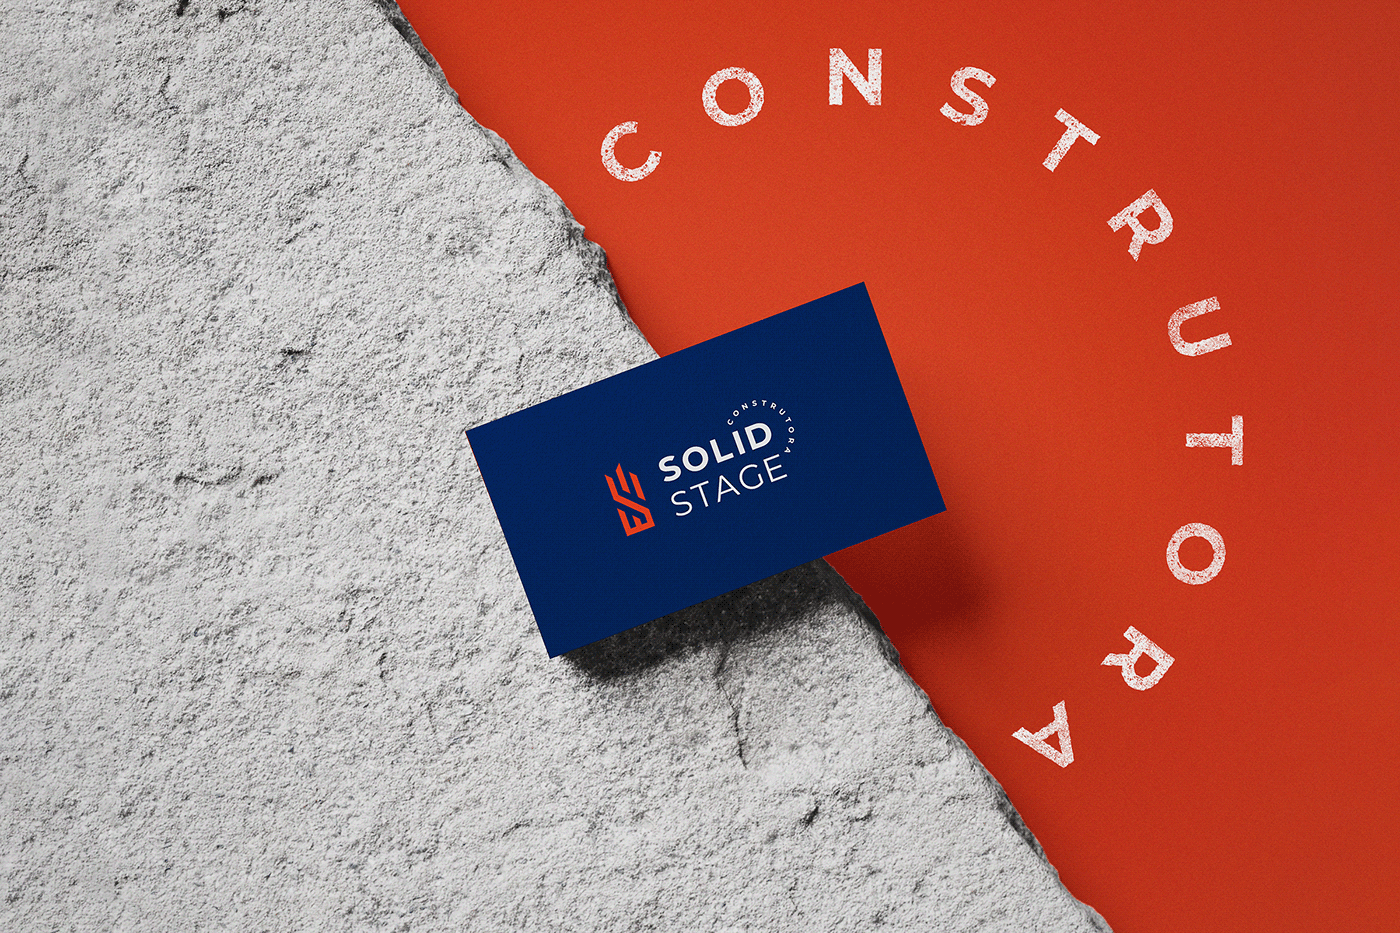 construction company logo Logotipo Solid Stage brand visual identity construction visual brand